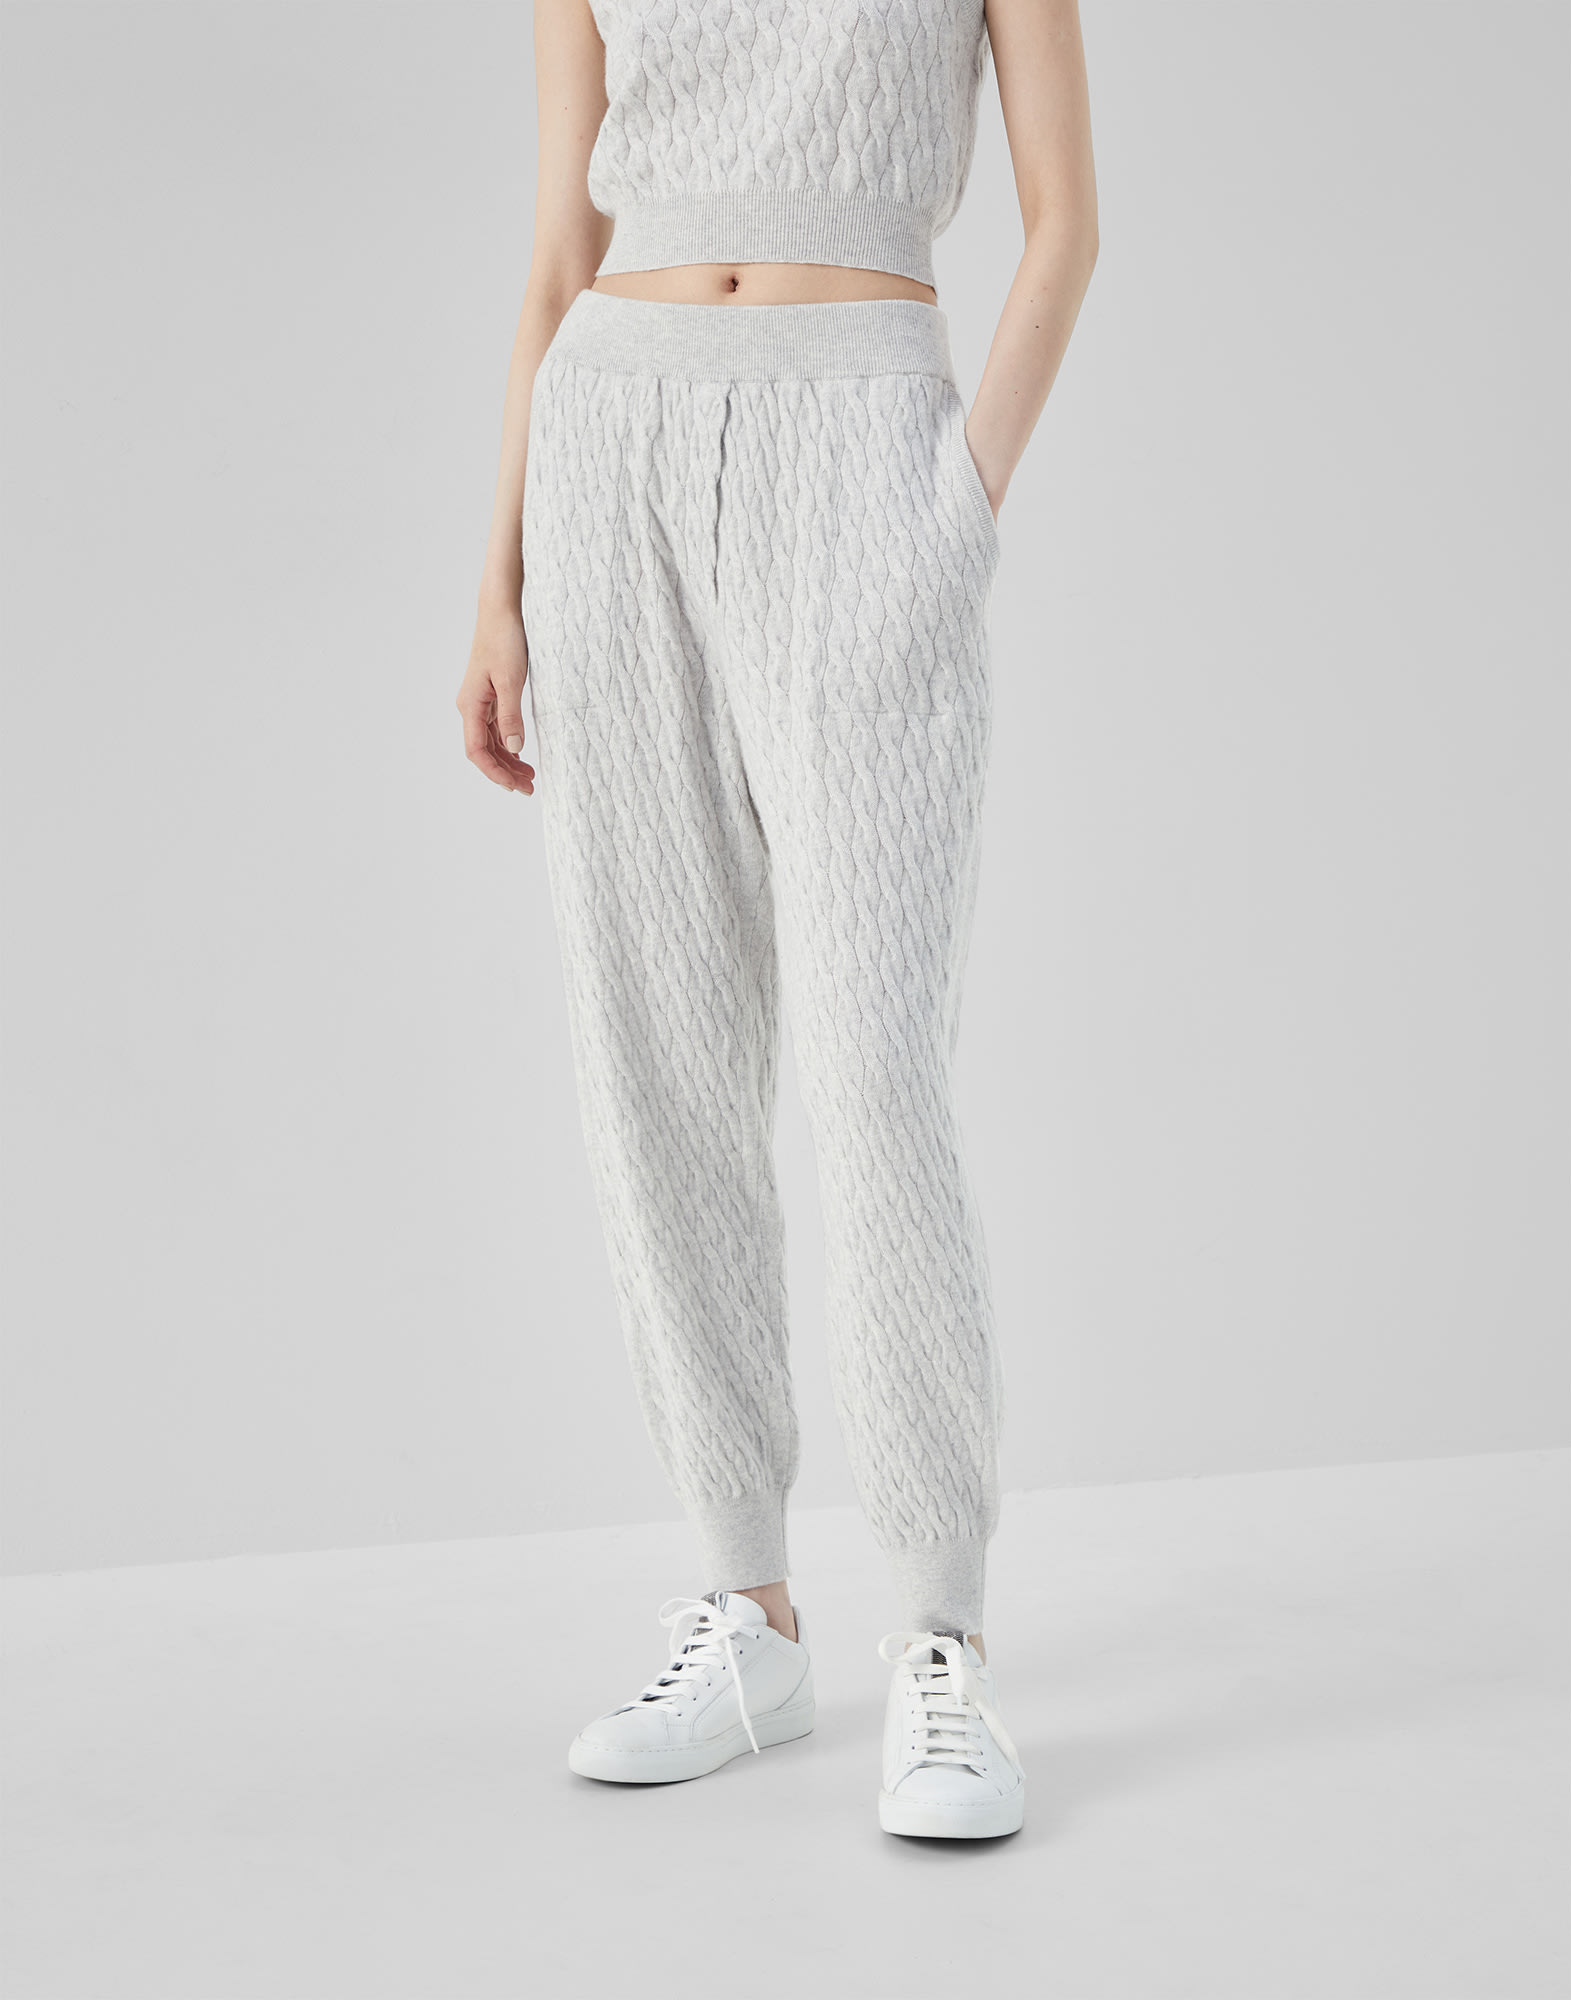 Cashmere knit trousers (232M12192499C271906) for Woman | Brunello